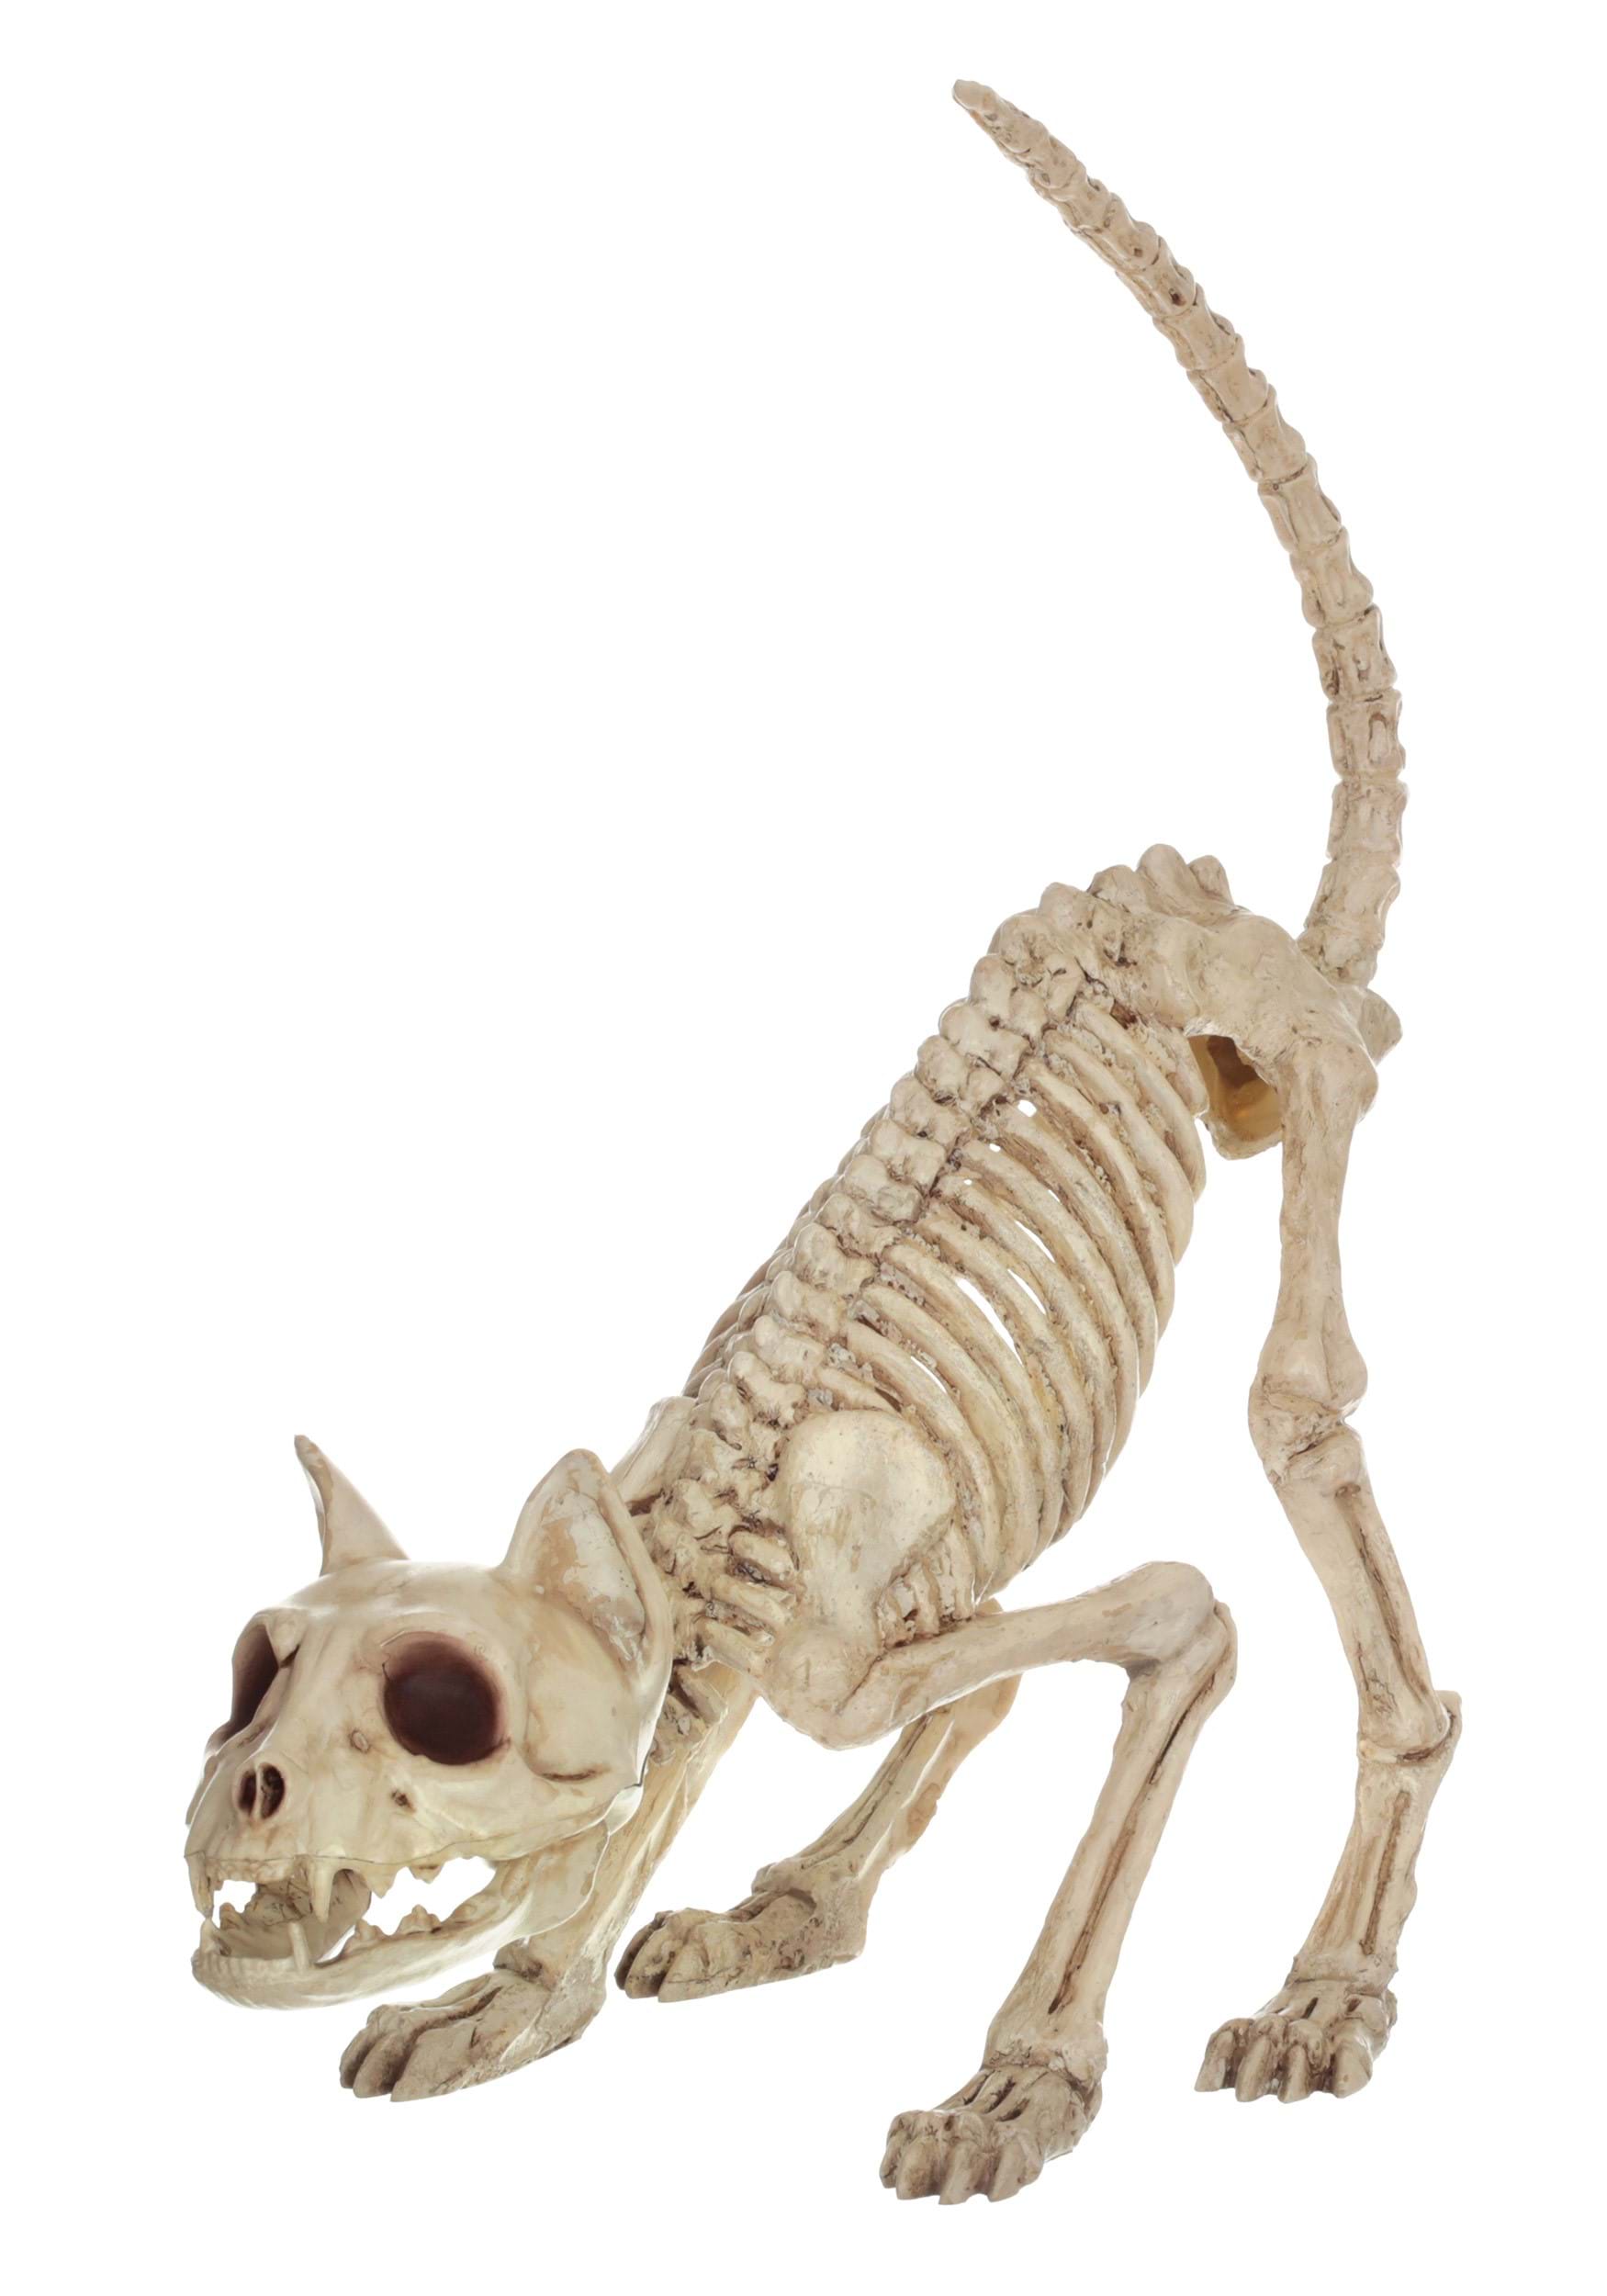 11 Inch Lil' Kitty Skeleton Halloween Prop , Animal Skeleton Decorations